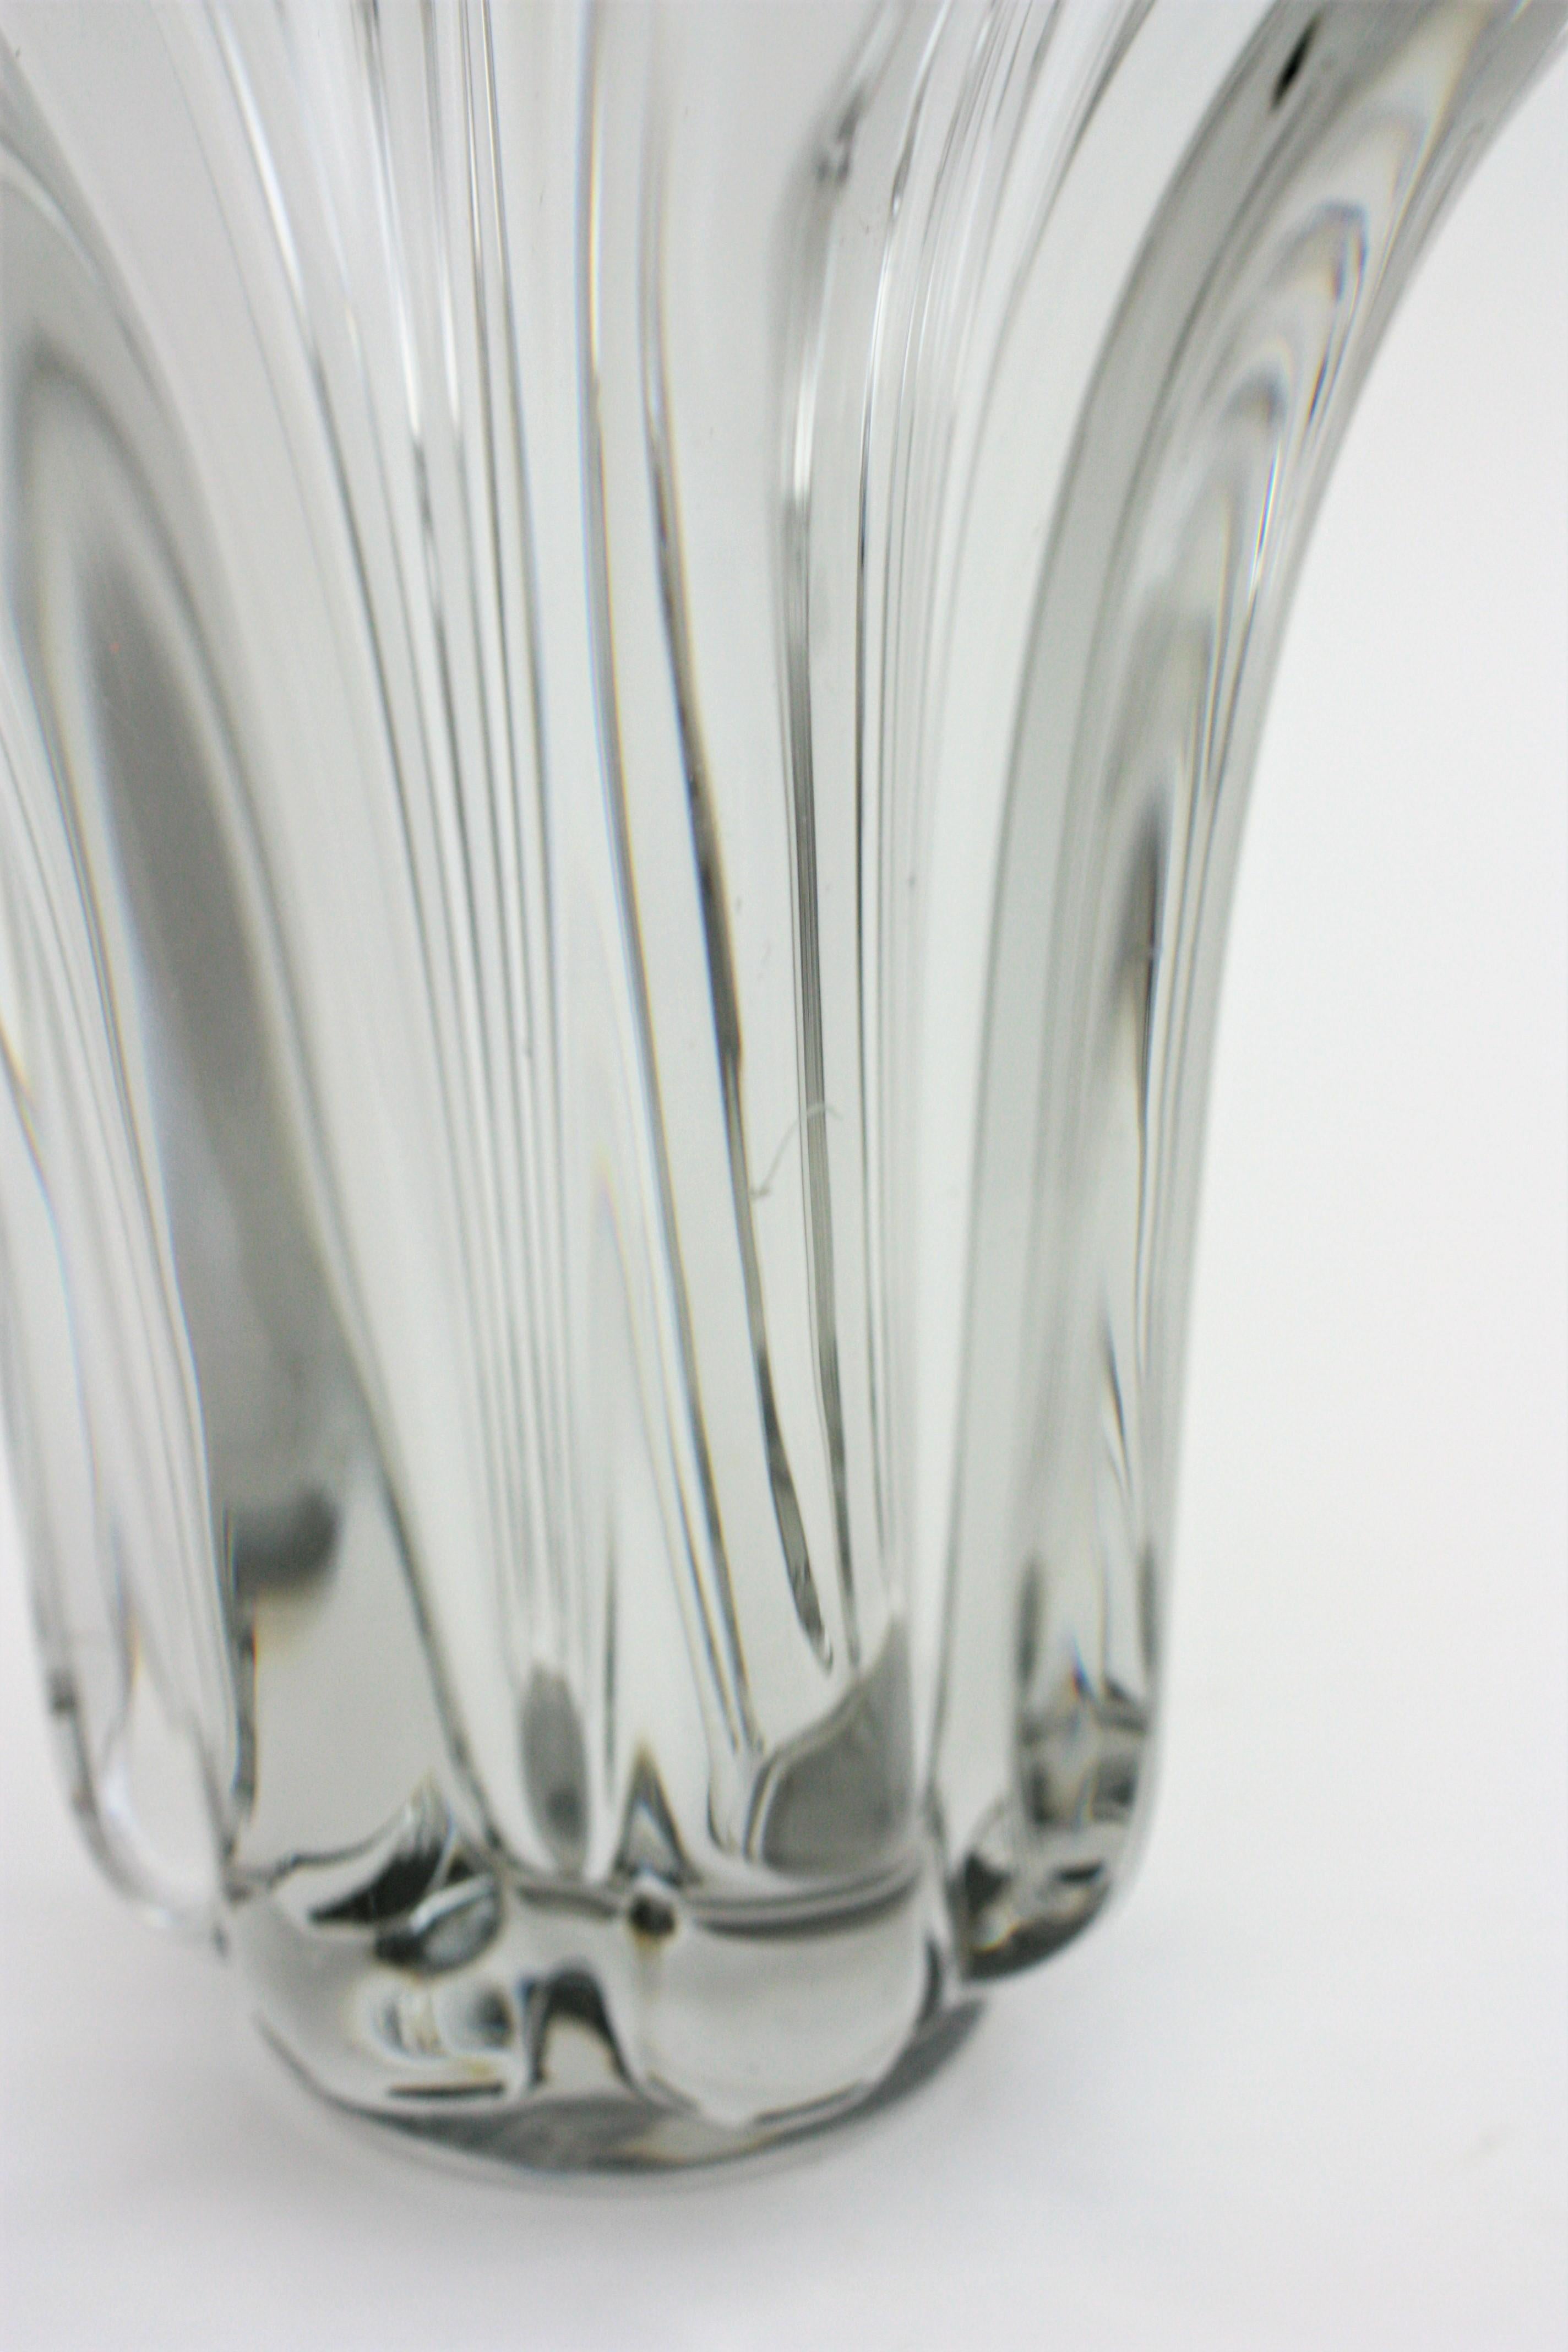 Flavio Poli Seguso Murano Clear Pulled Art Glass Vase For Sale 2